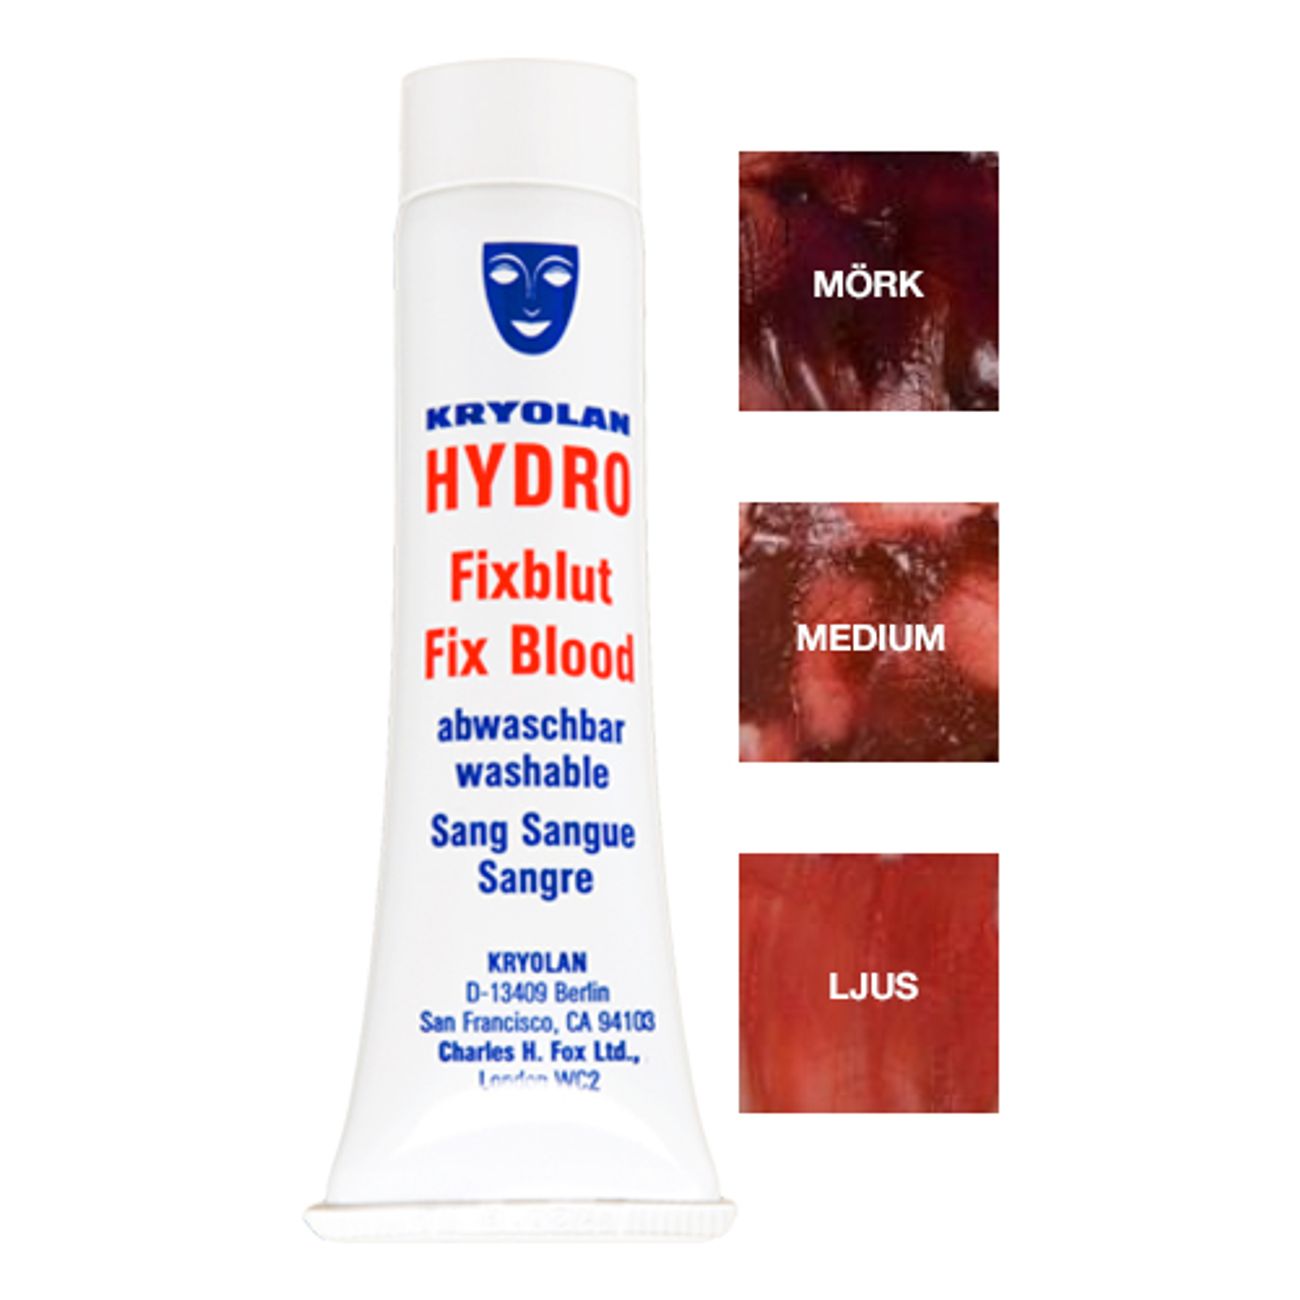 kryolan-hydro-fix-blod-2